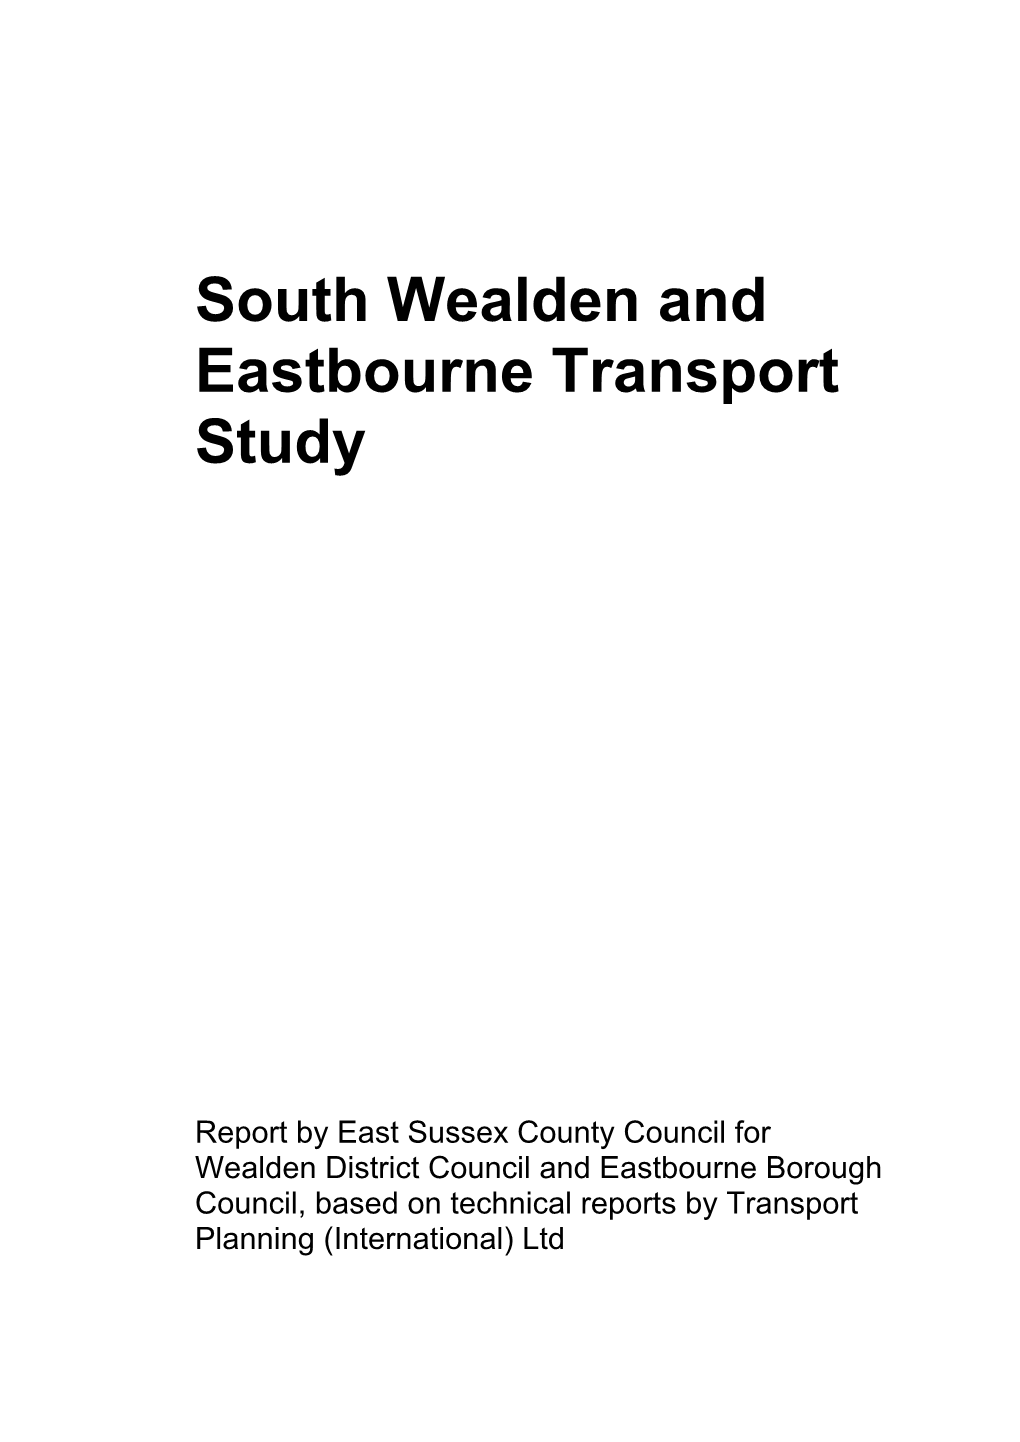 South Wealden and Eastbourne Transport Study